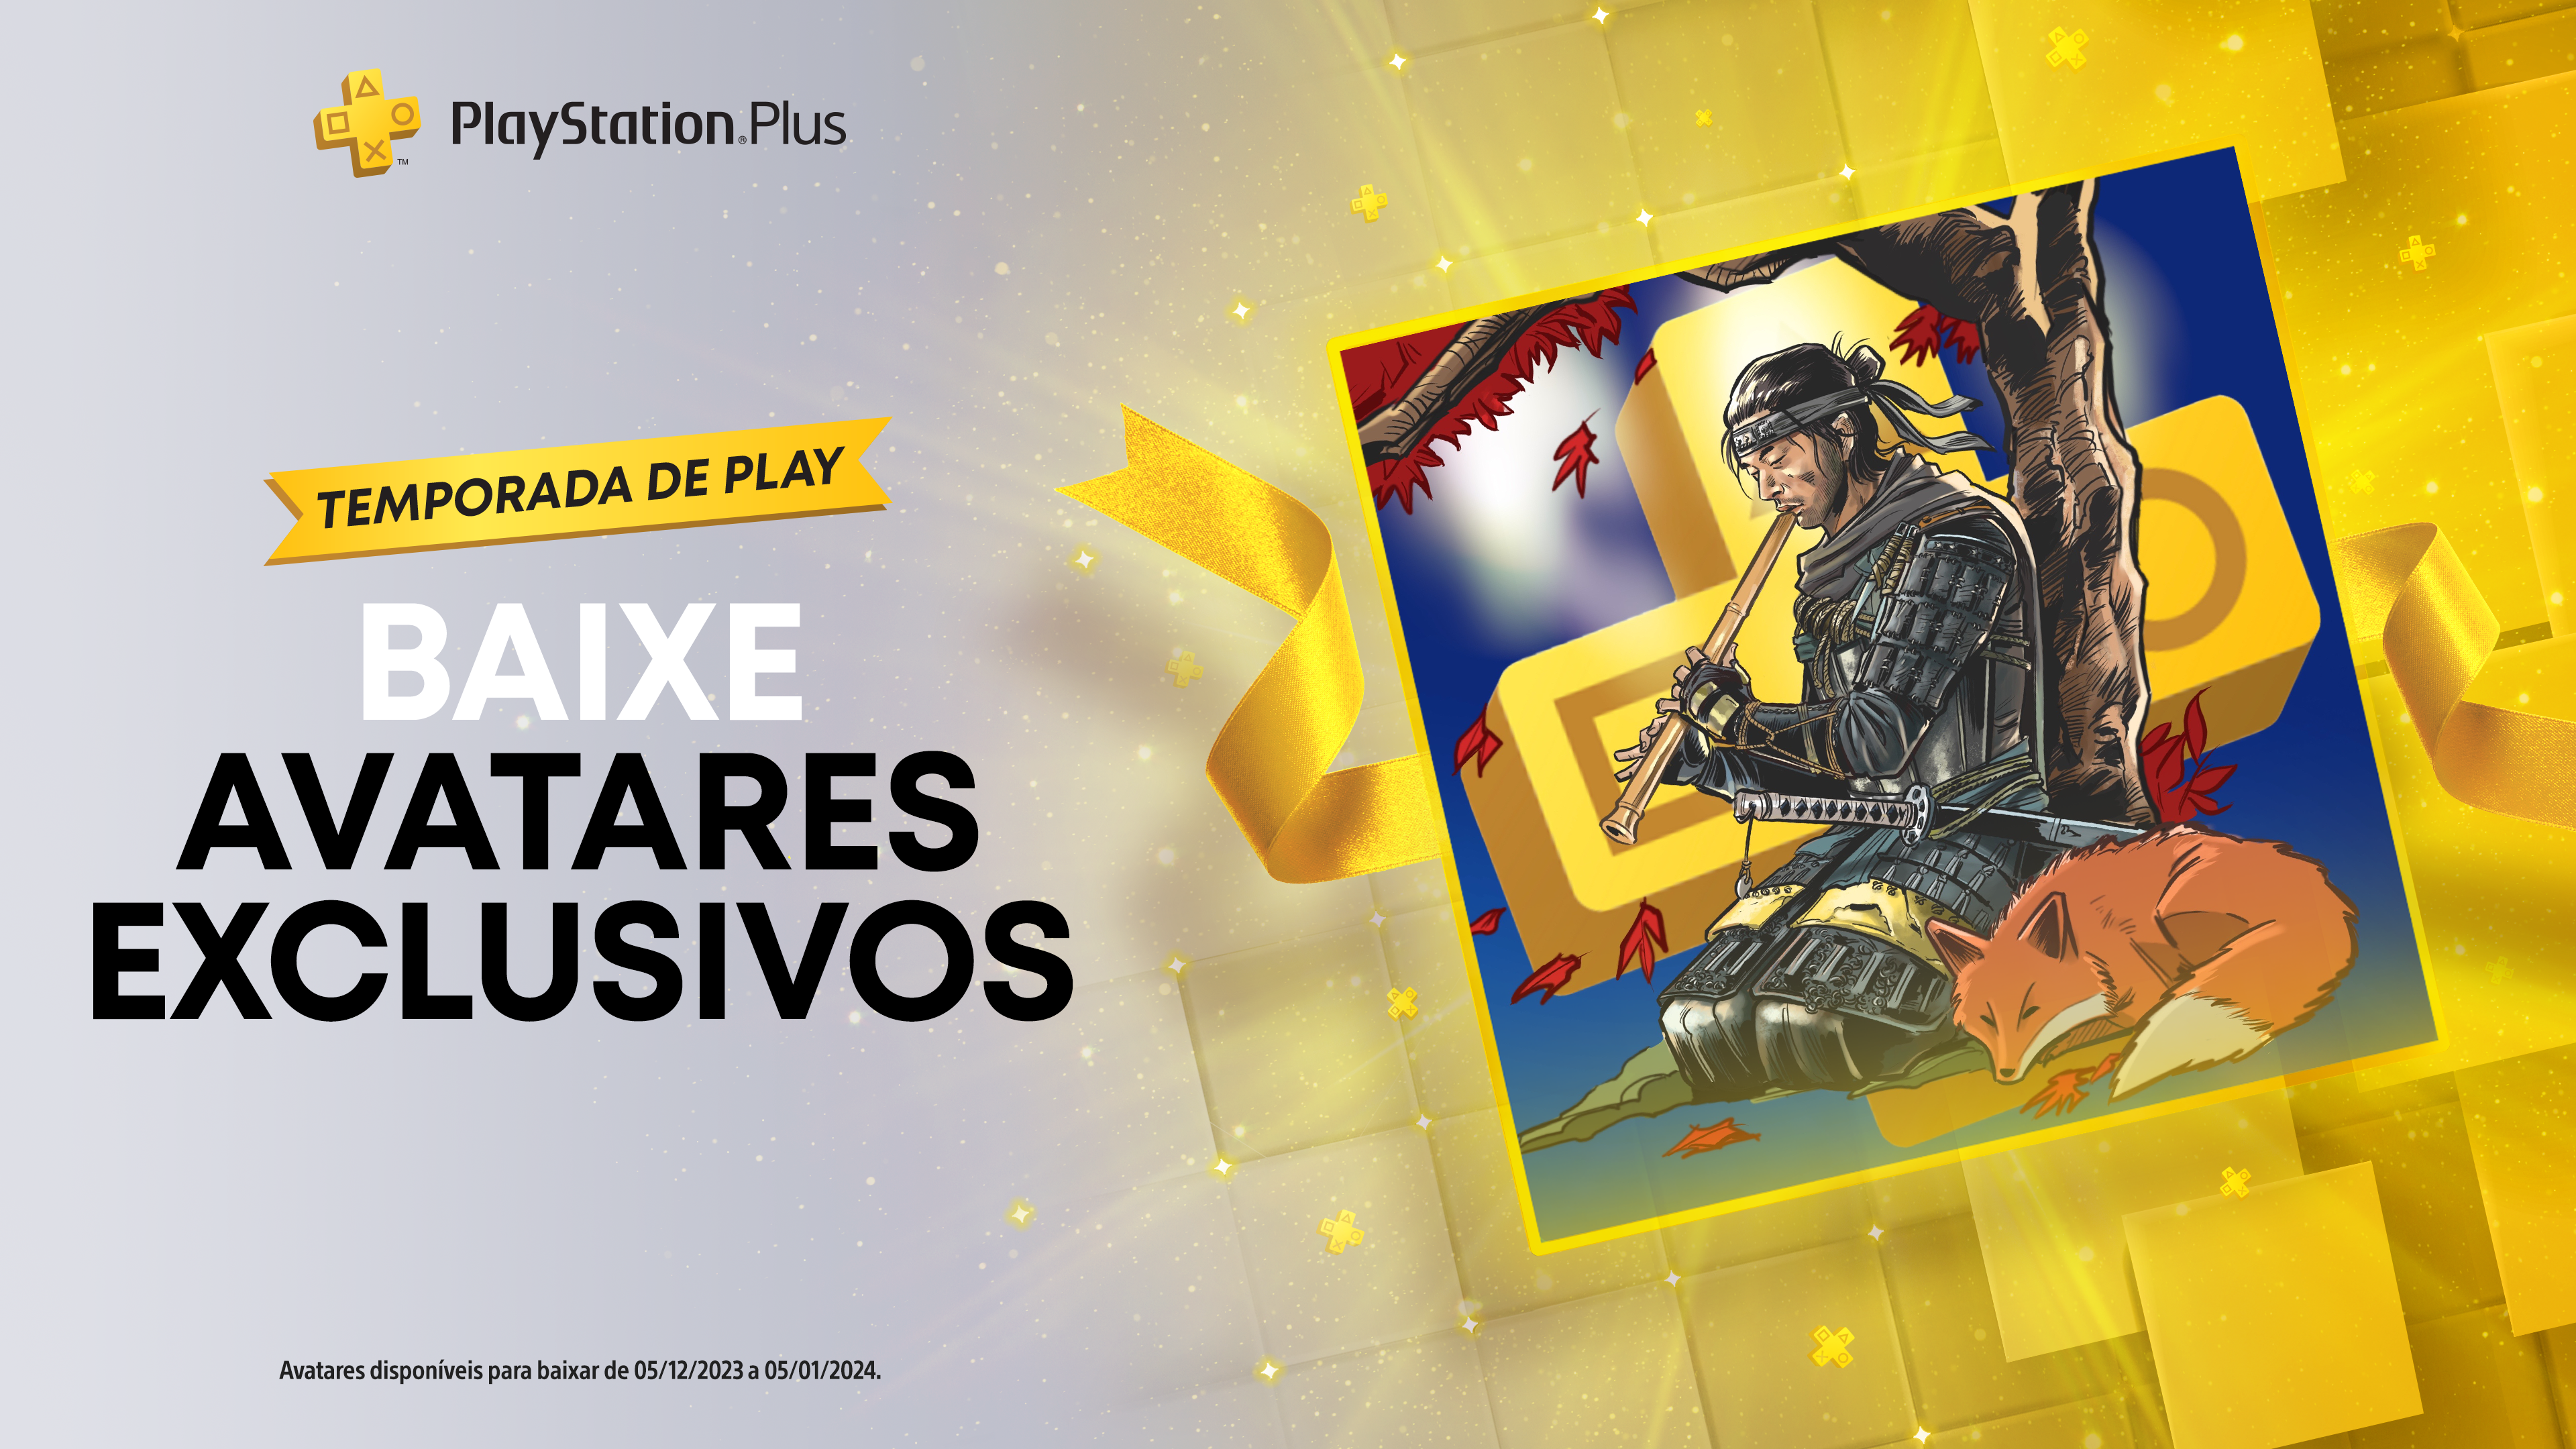 PlayStation Brasil on X: A promoção Days of Play começa hoje! Uma